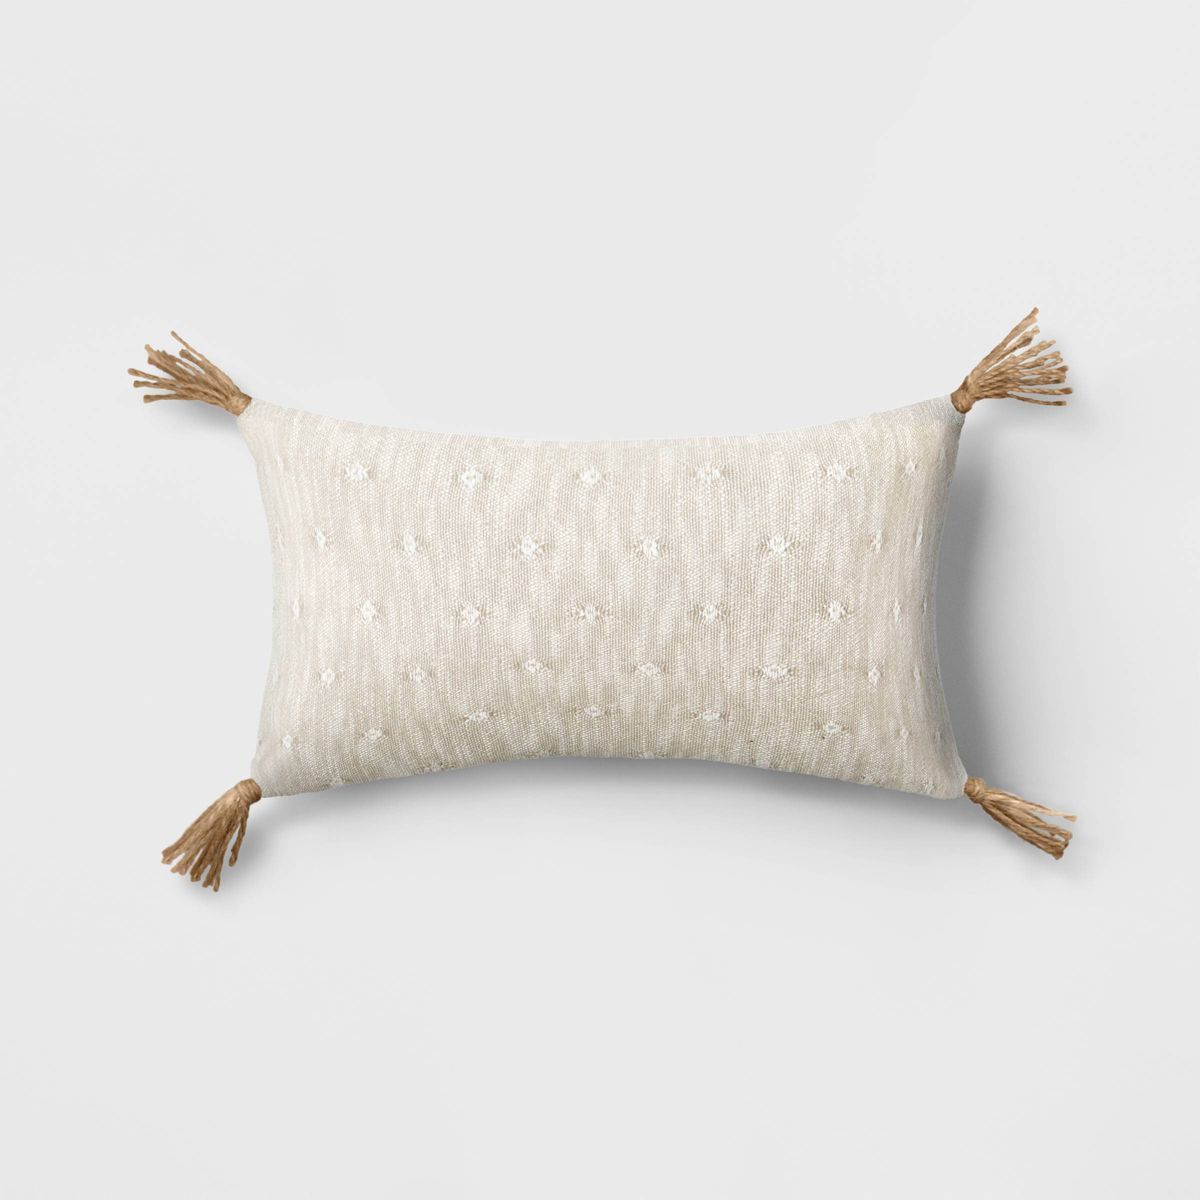 Woven Jacquard Lumbar Throw Pillow with Tassels Khaki - Threshold™ | Target